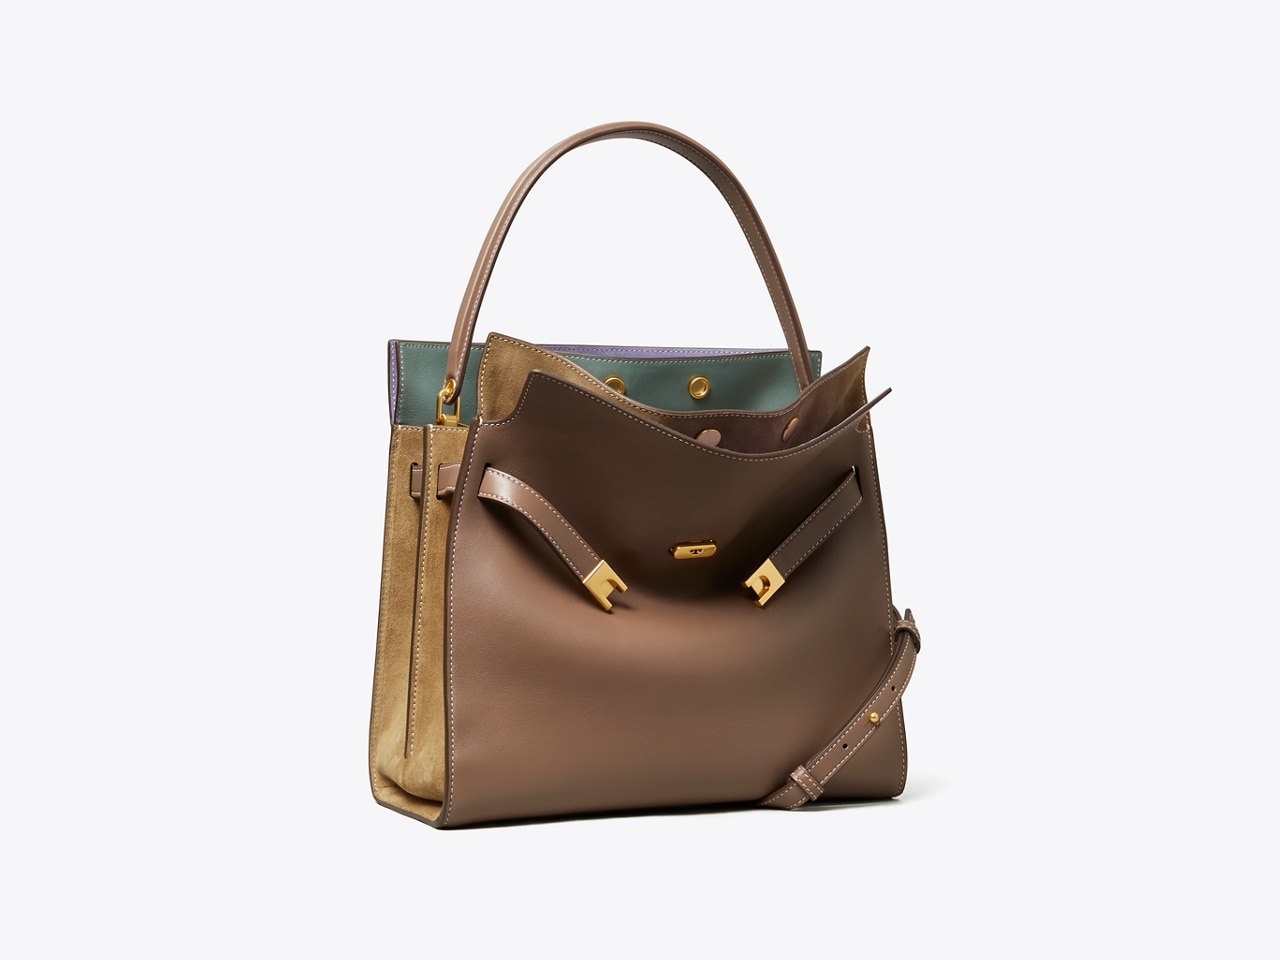 Tory Burch Women's Lee Radziwill Double Bag, Clam Shell, Brown, One Size:  Handbags